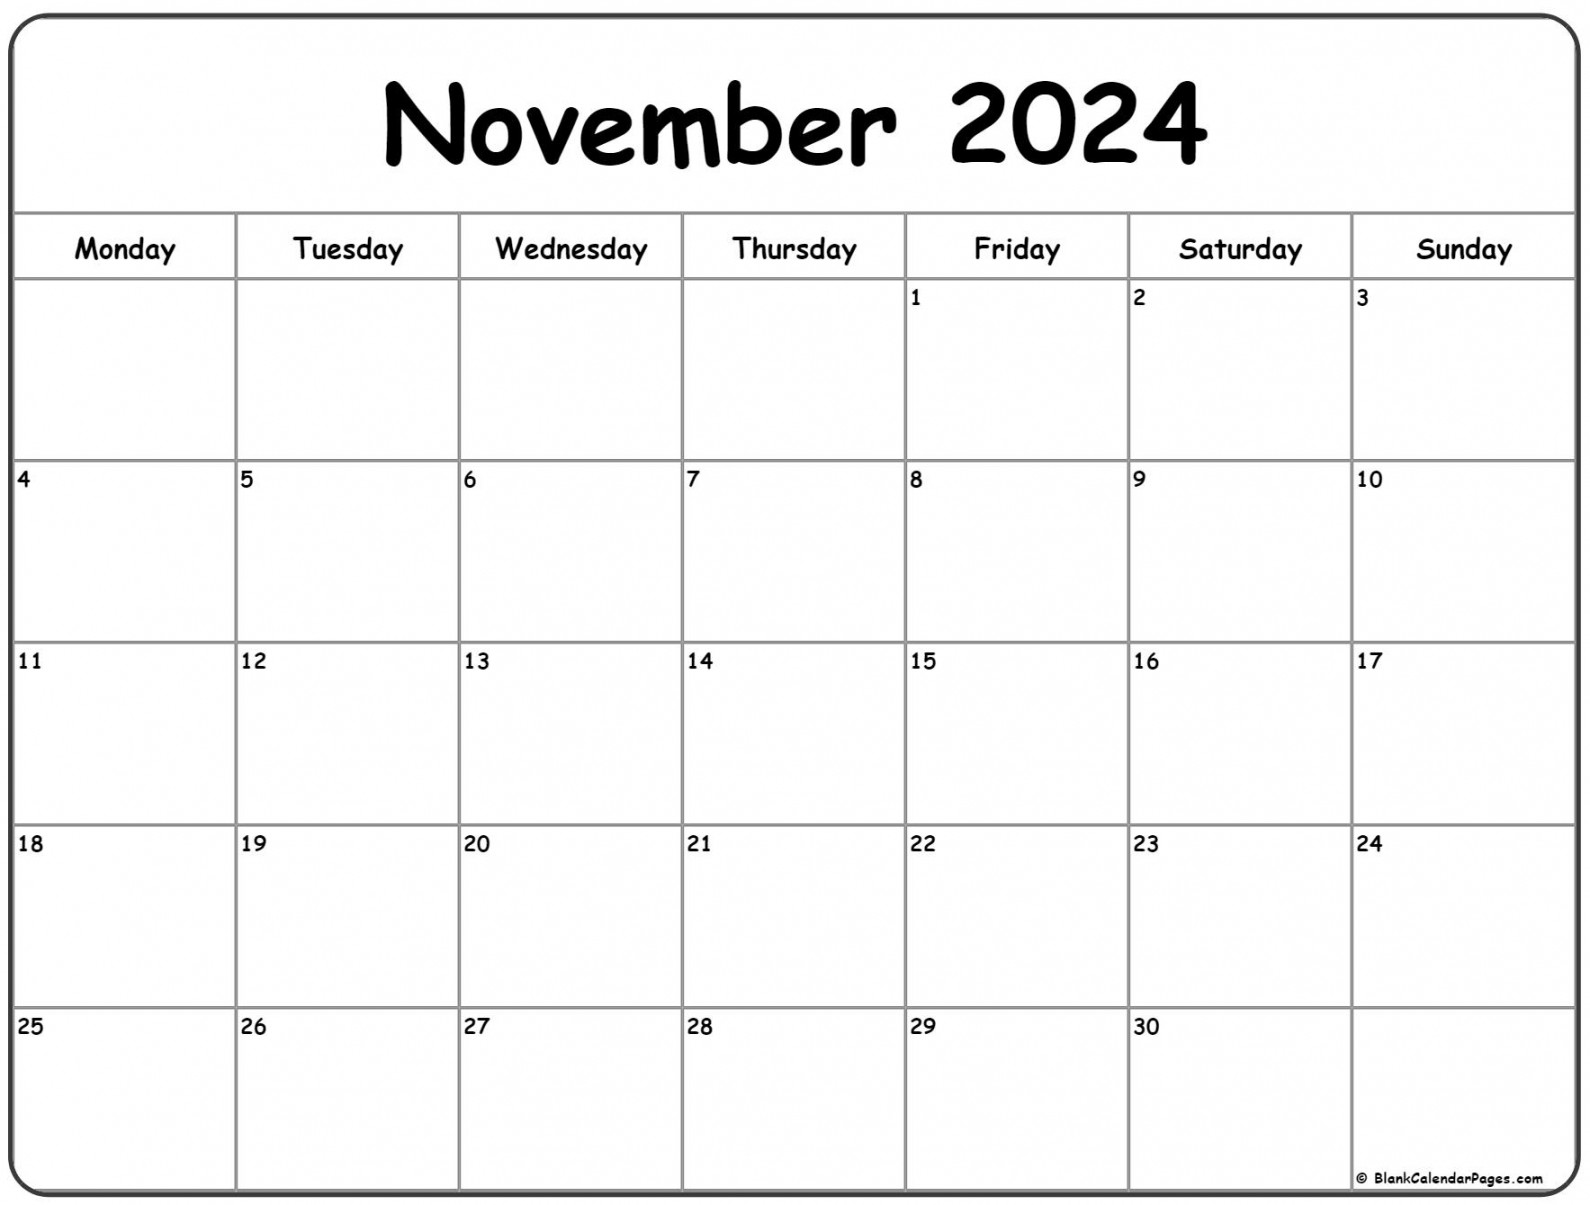 November Monday Calendar Monday to Sunday